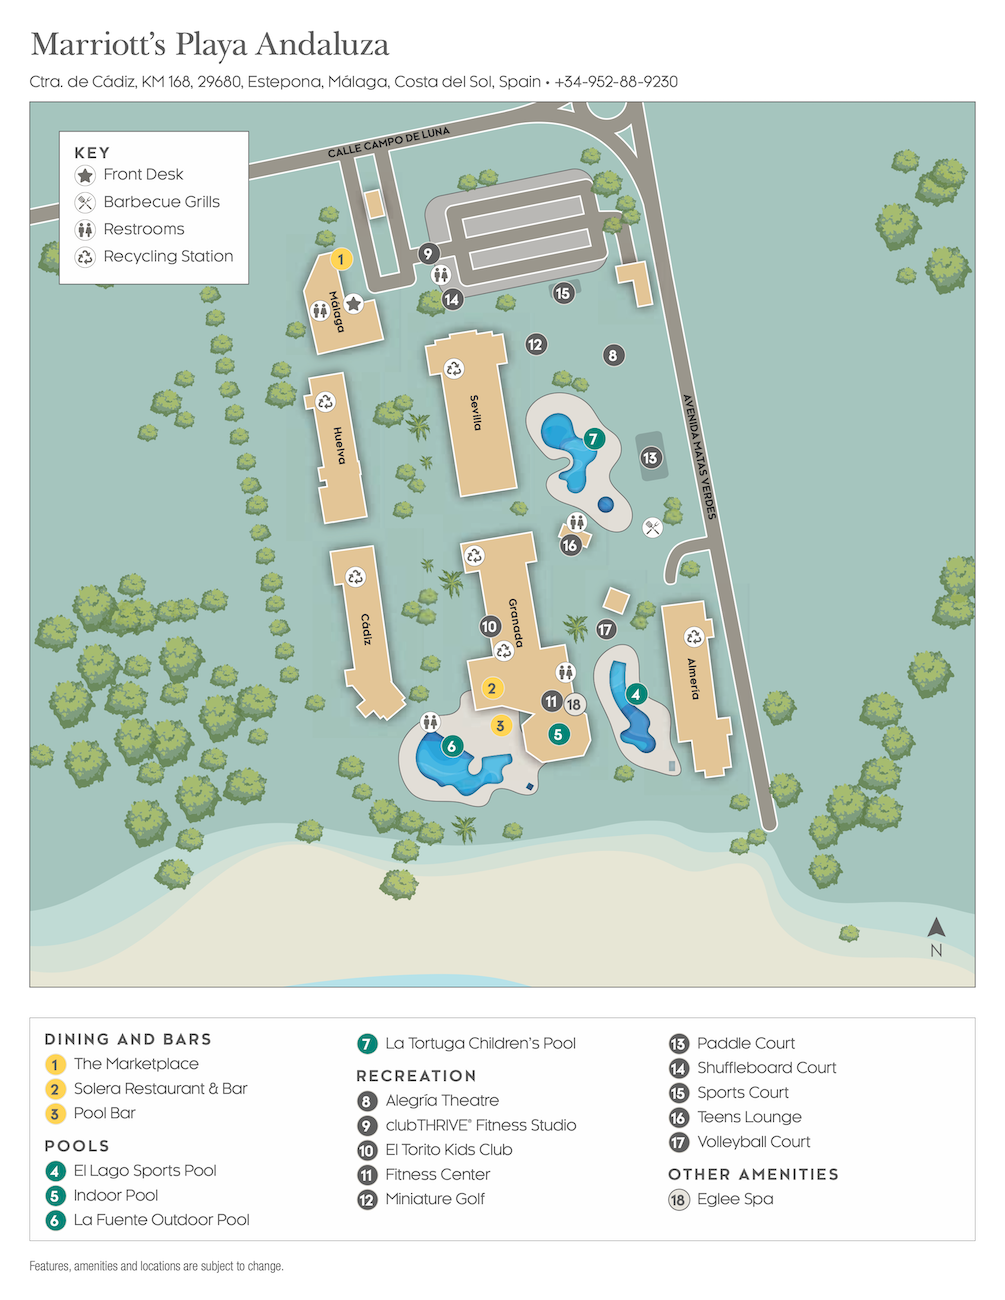 Marriott Playa Andaluza Resort Map